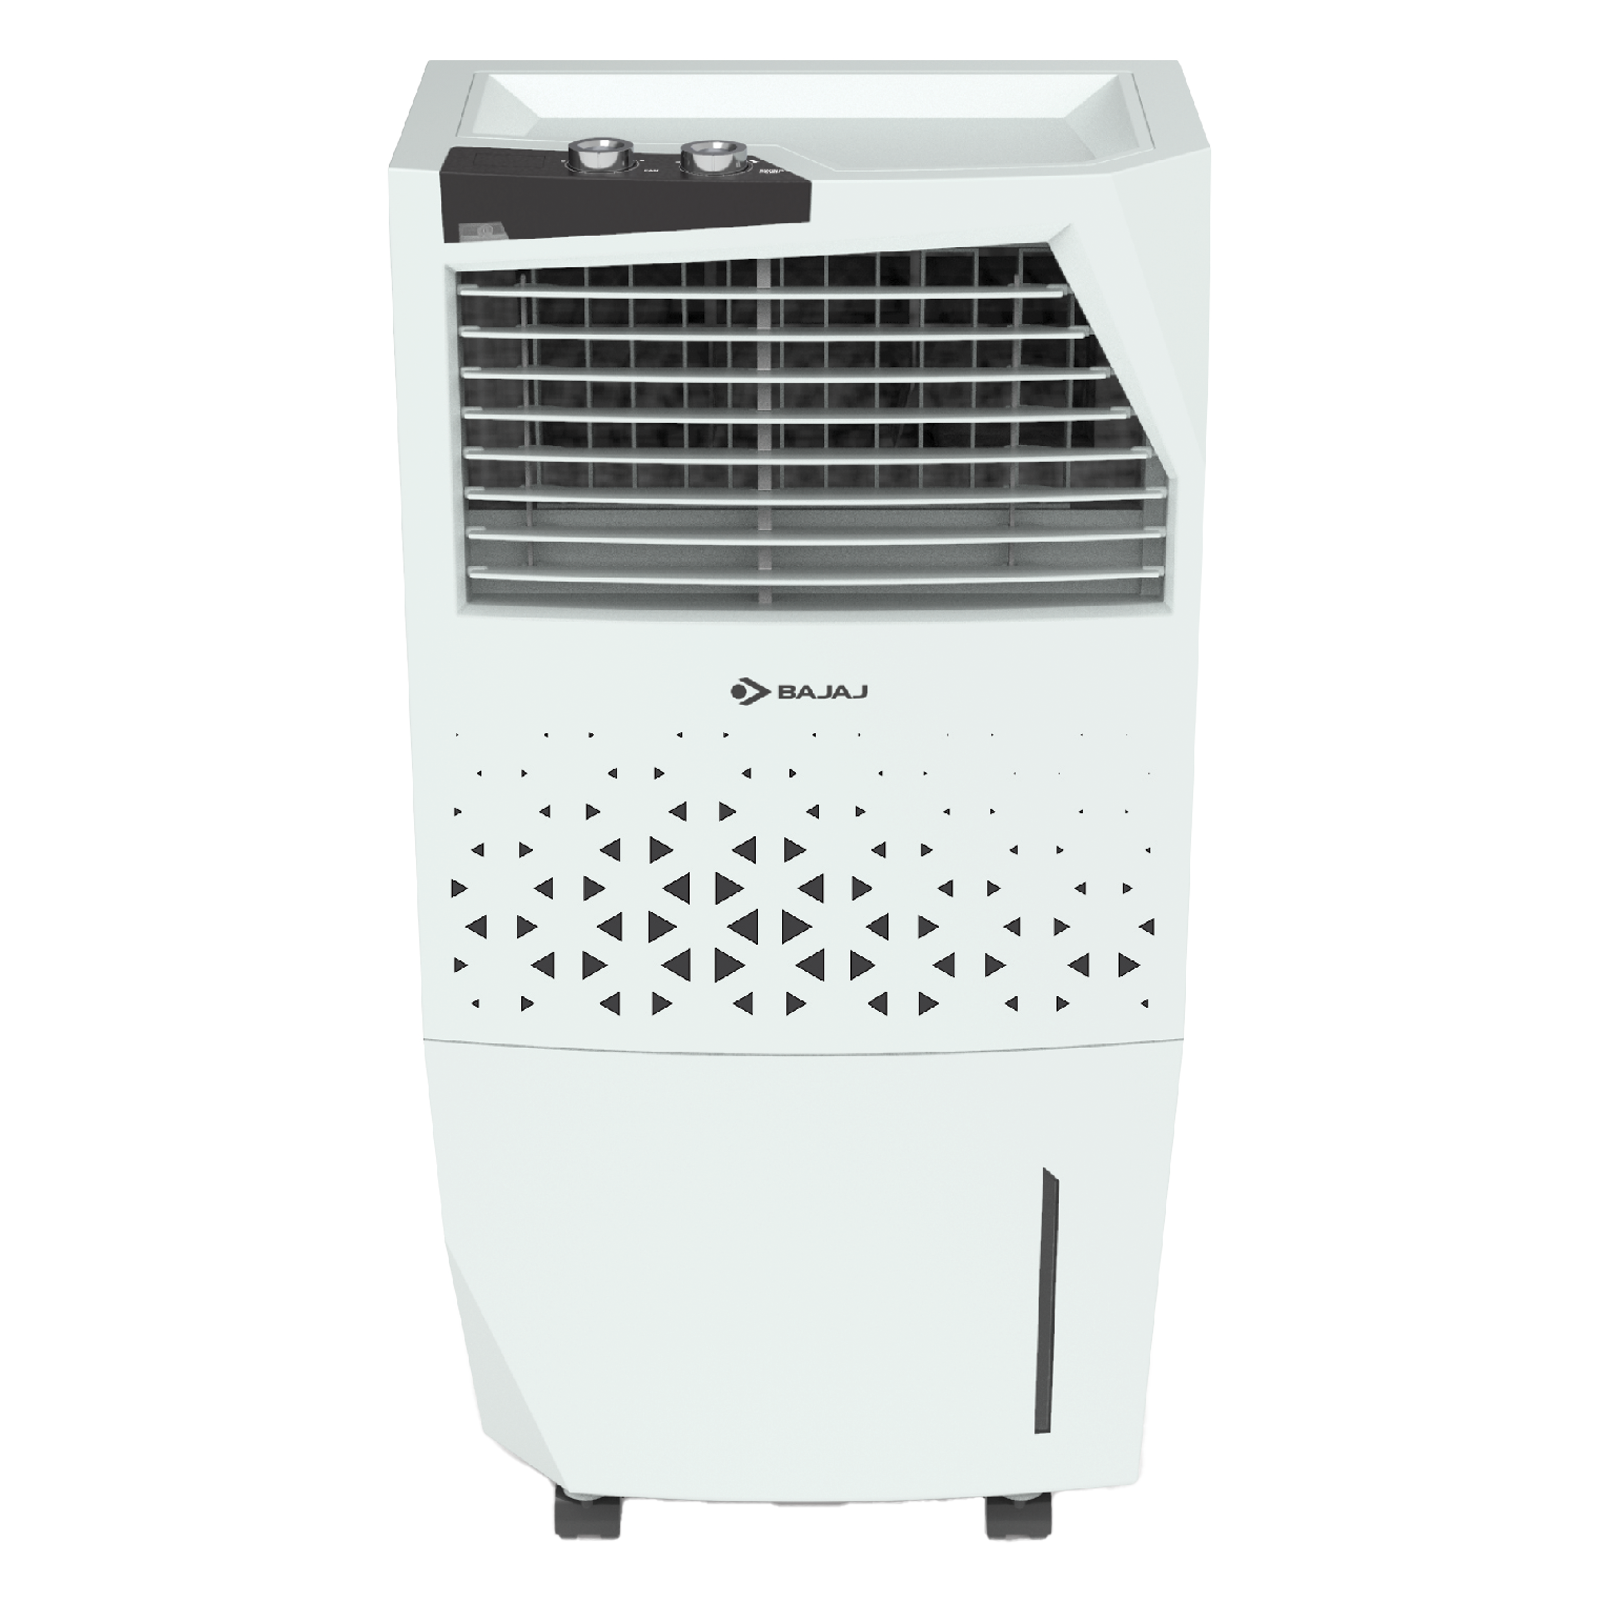 Bajaj 36 Litres Tower Air Cooler (Anti-Bacterial Technology, TMH36 Skive, White)